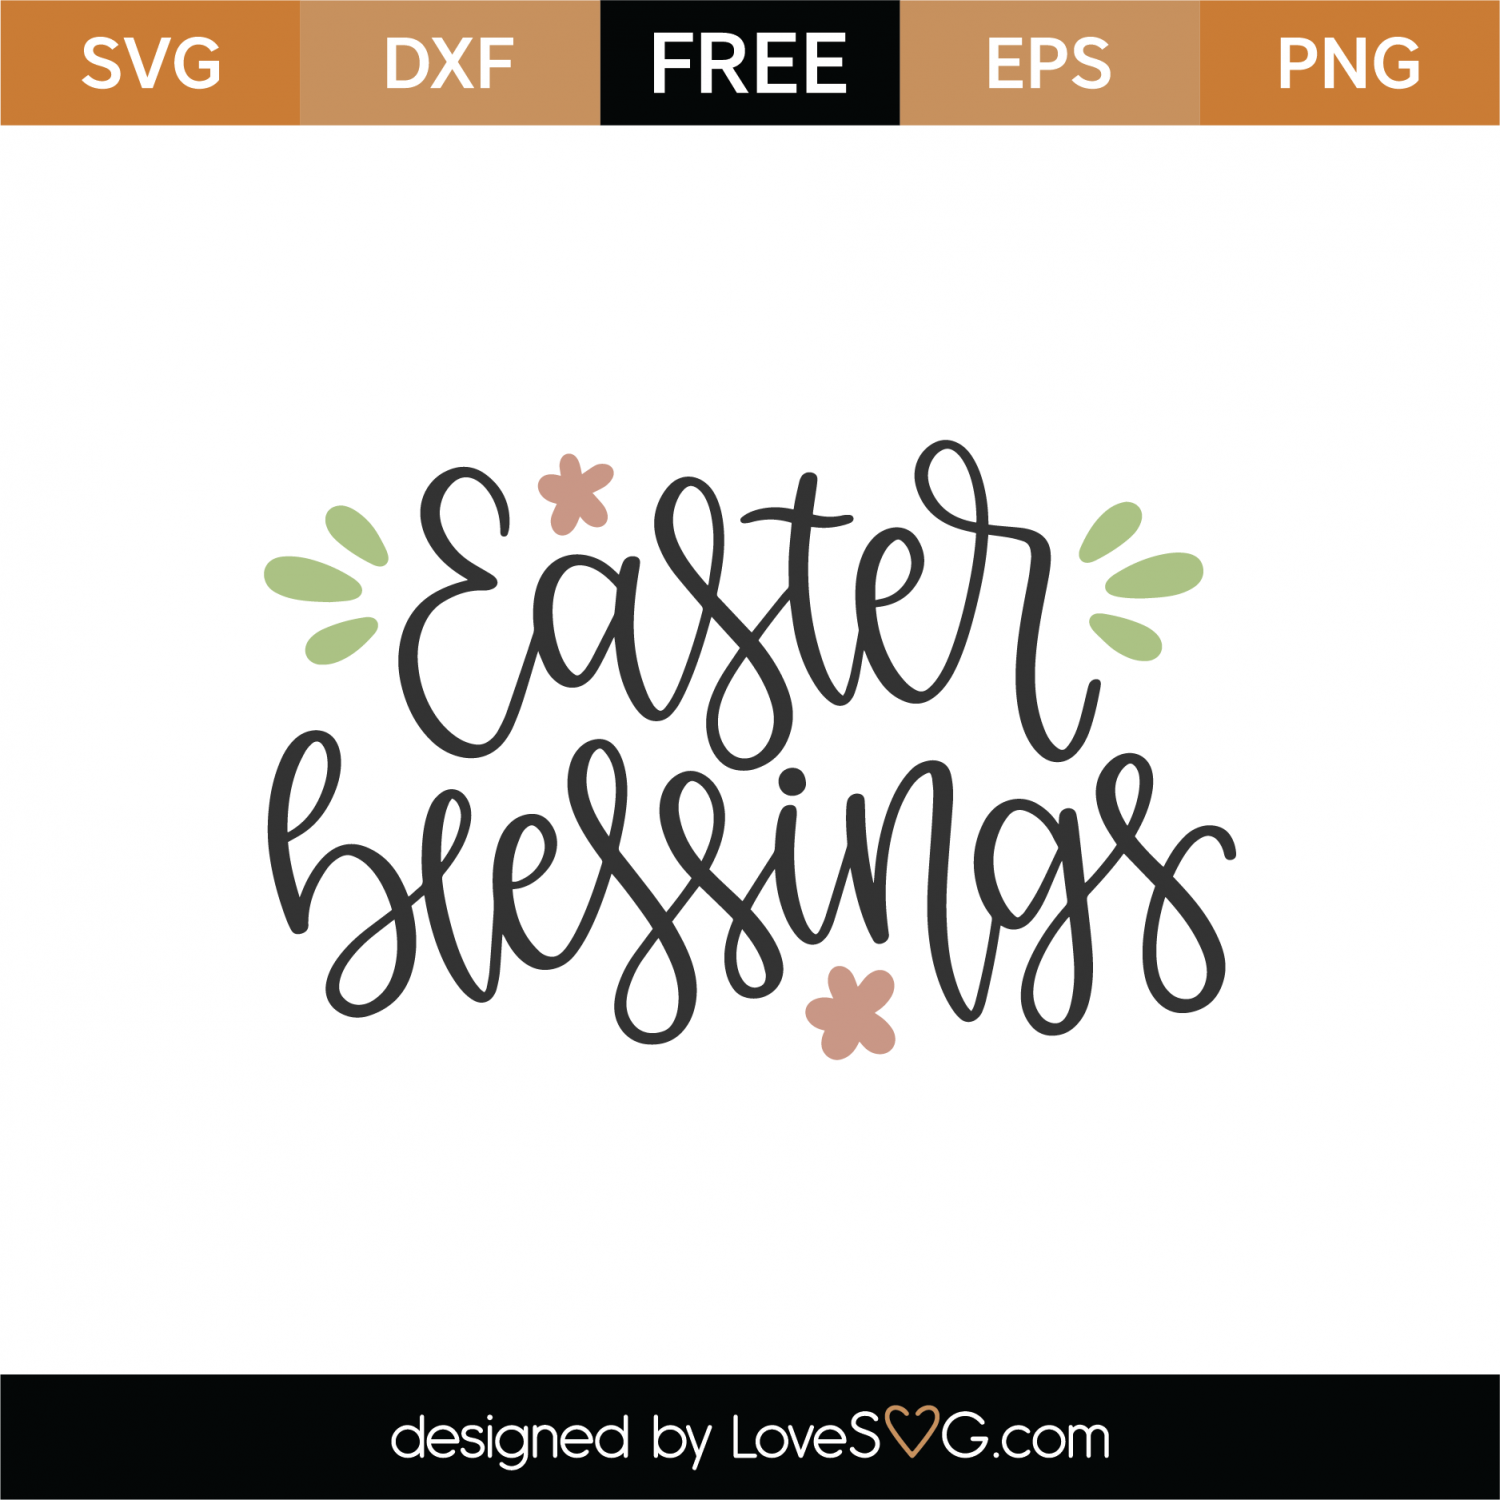 Free Easter Blessings SVG Cut File | Lovesvg.com